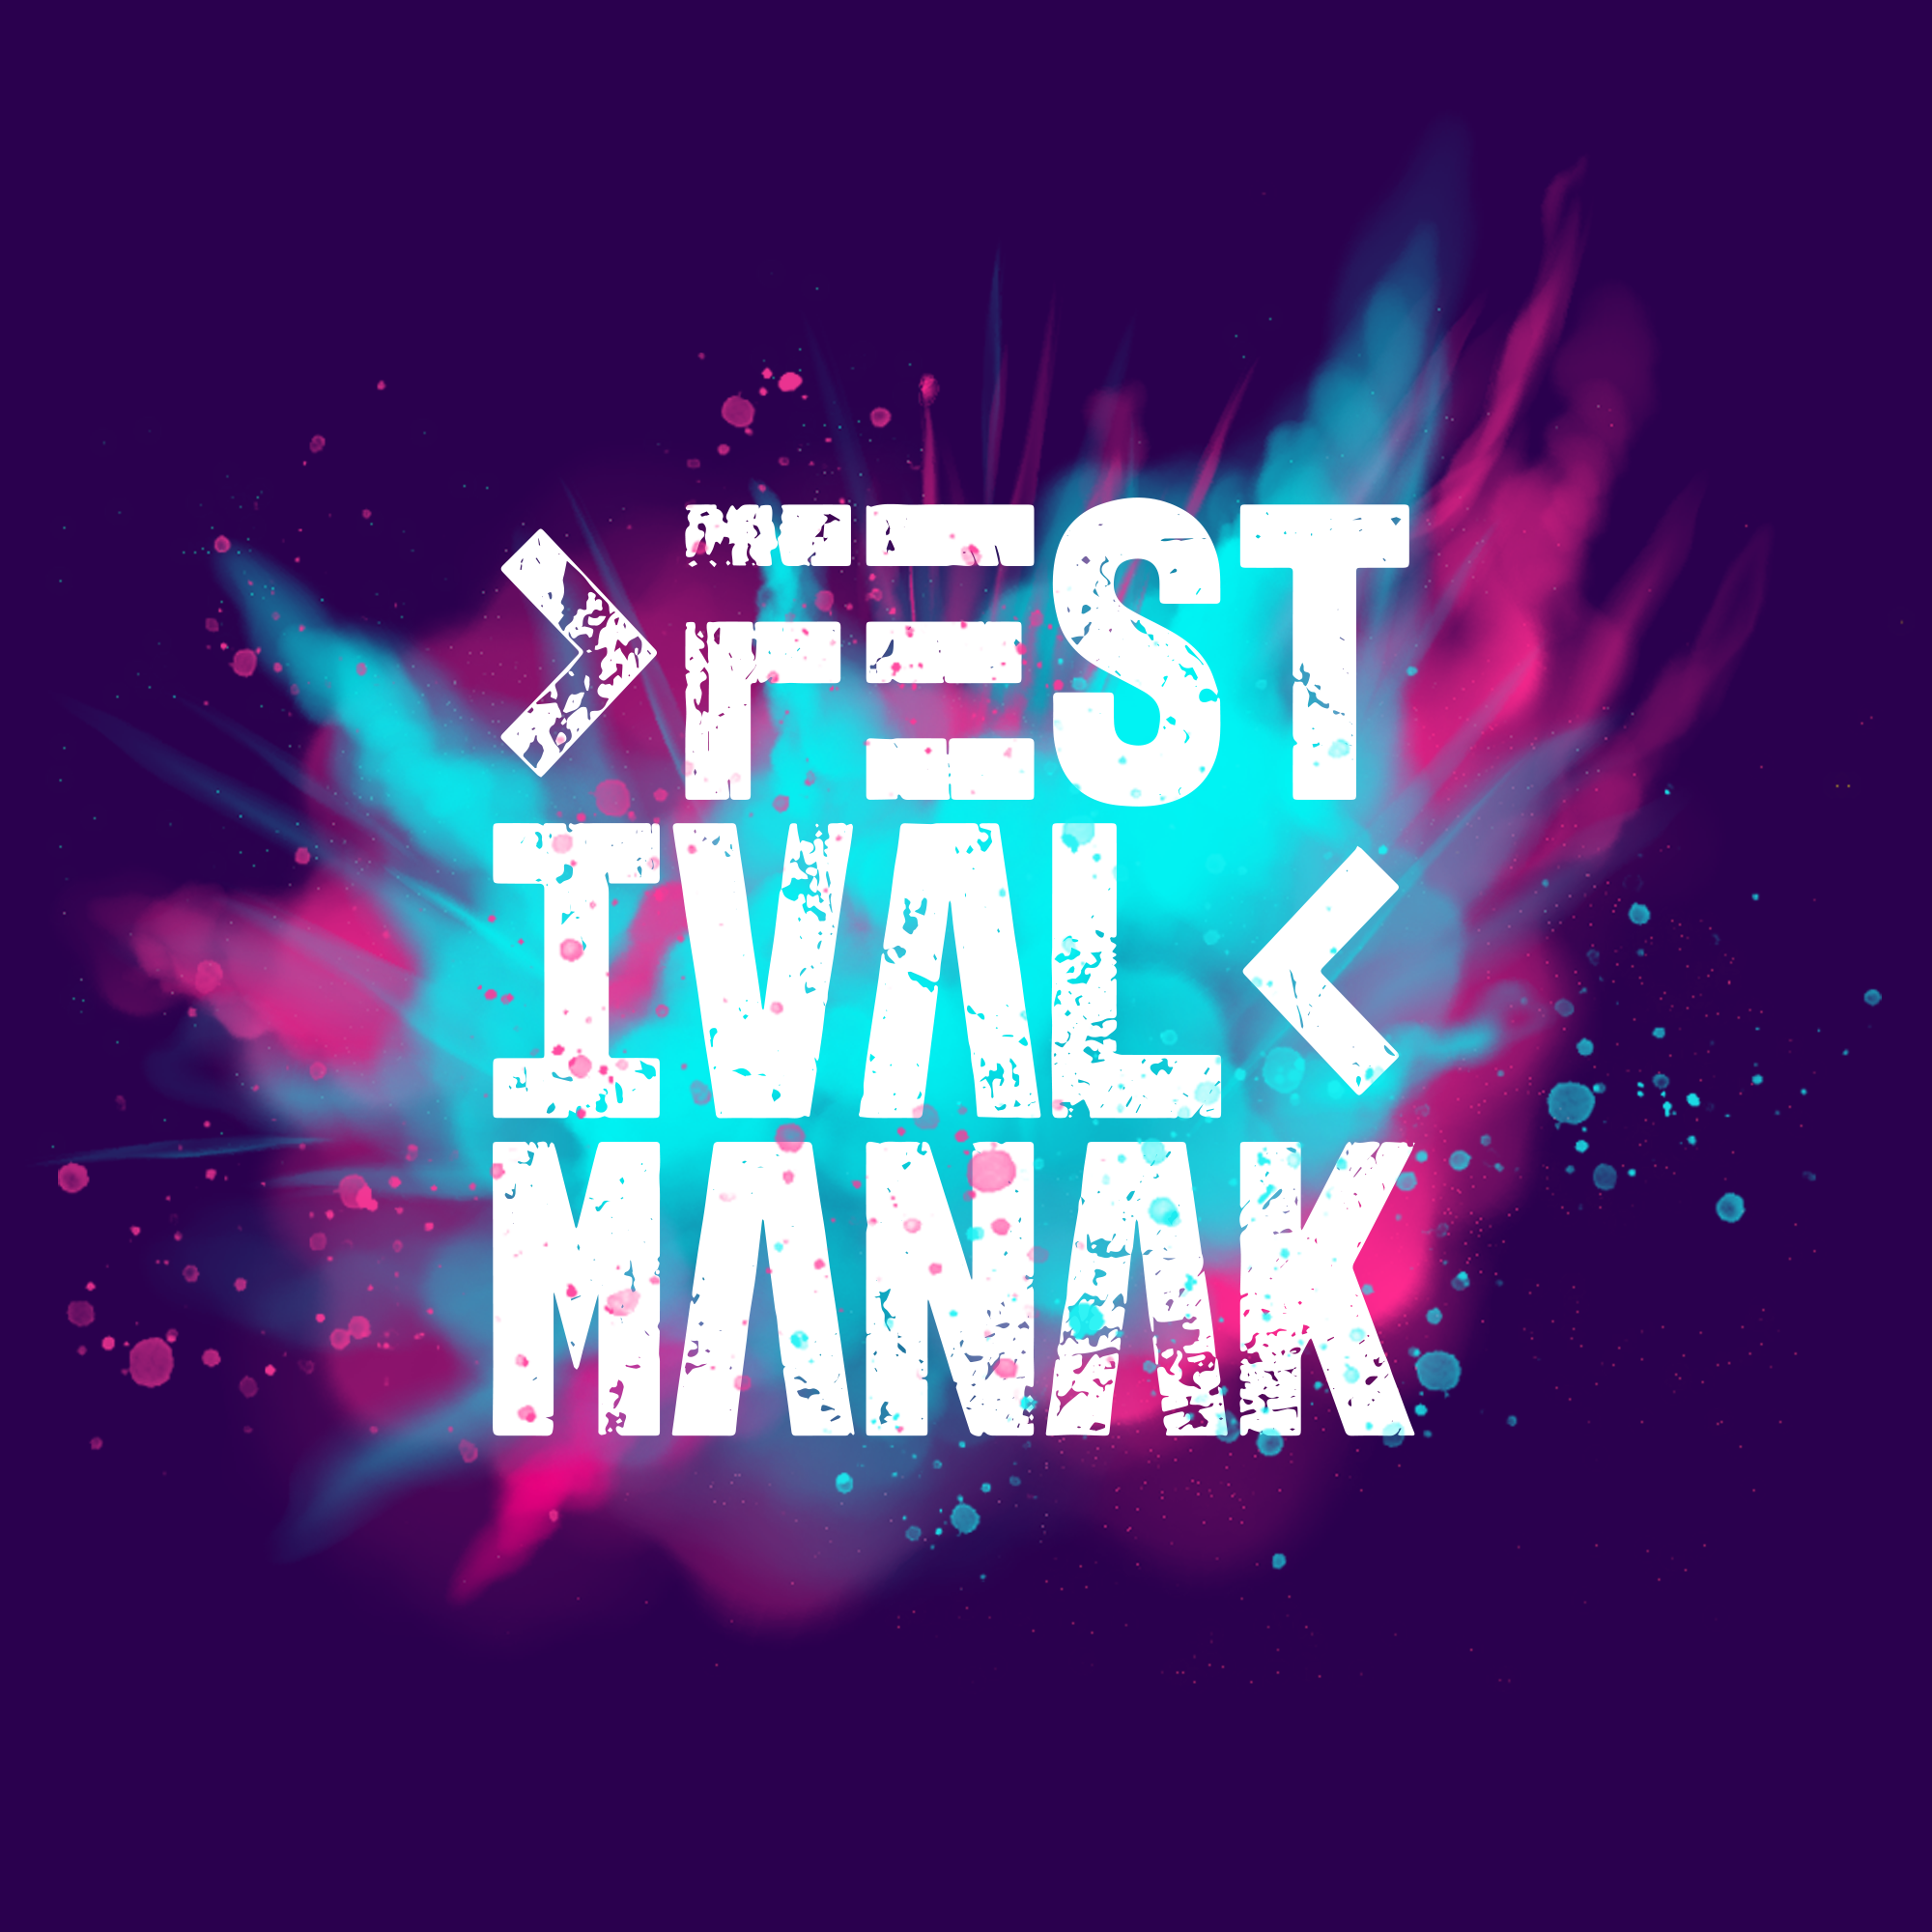 Festivalmanak logo